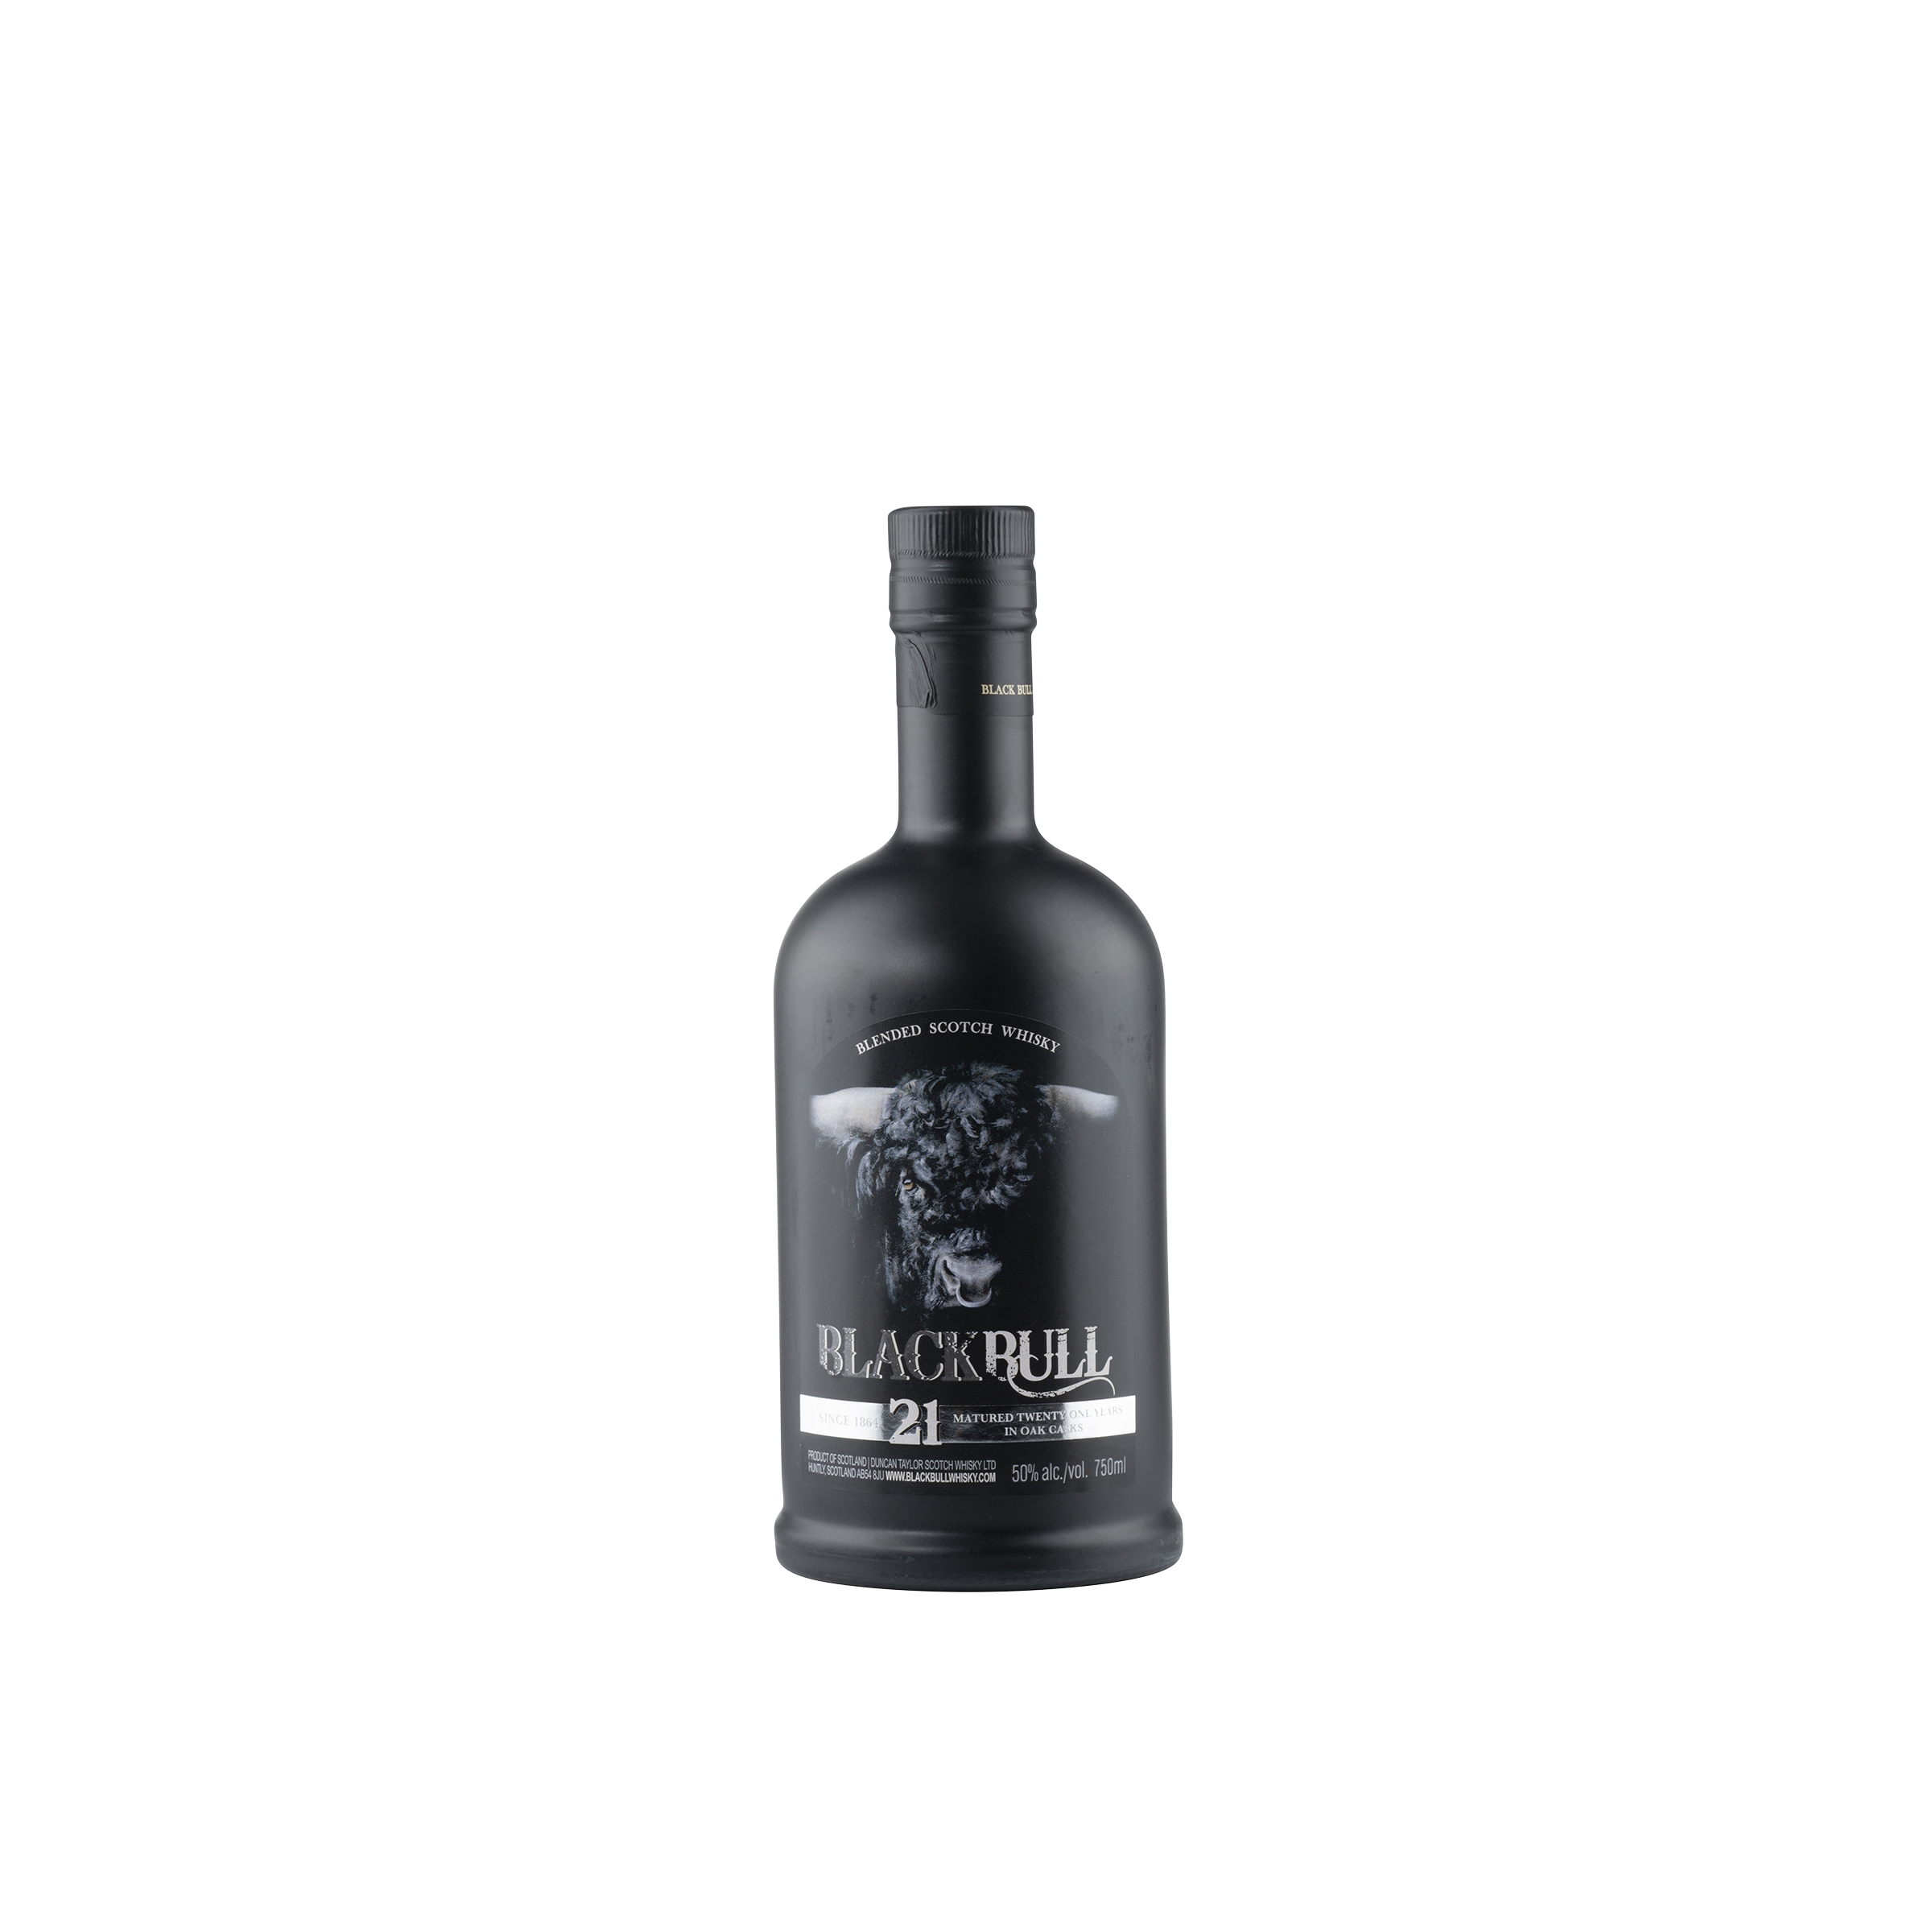 Black Bull 21 Year Old Blended Scotch Whisky NV Bottle Front